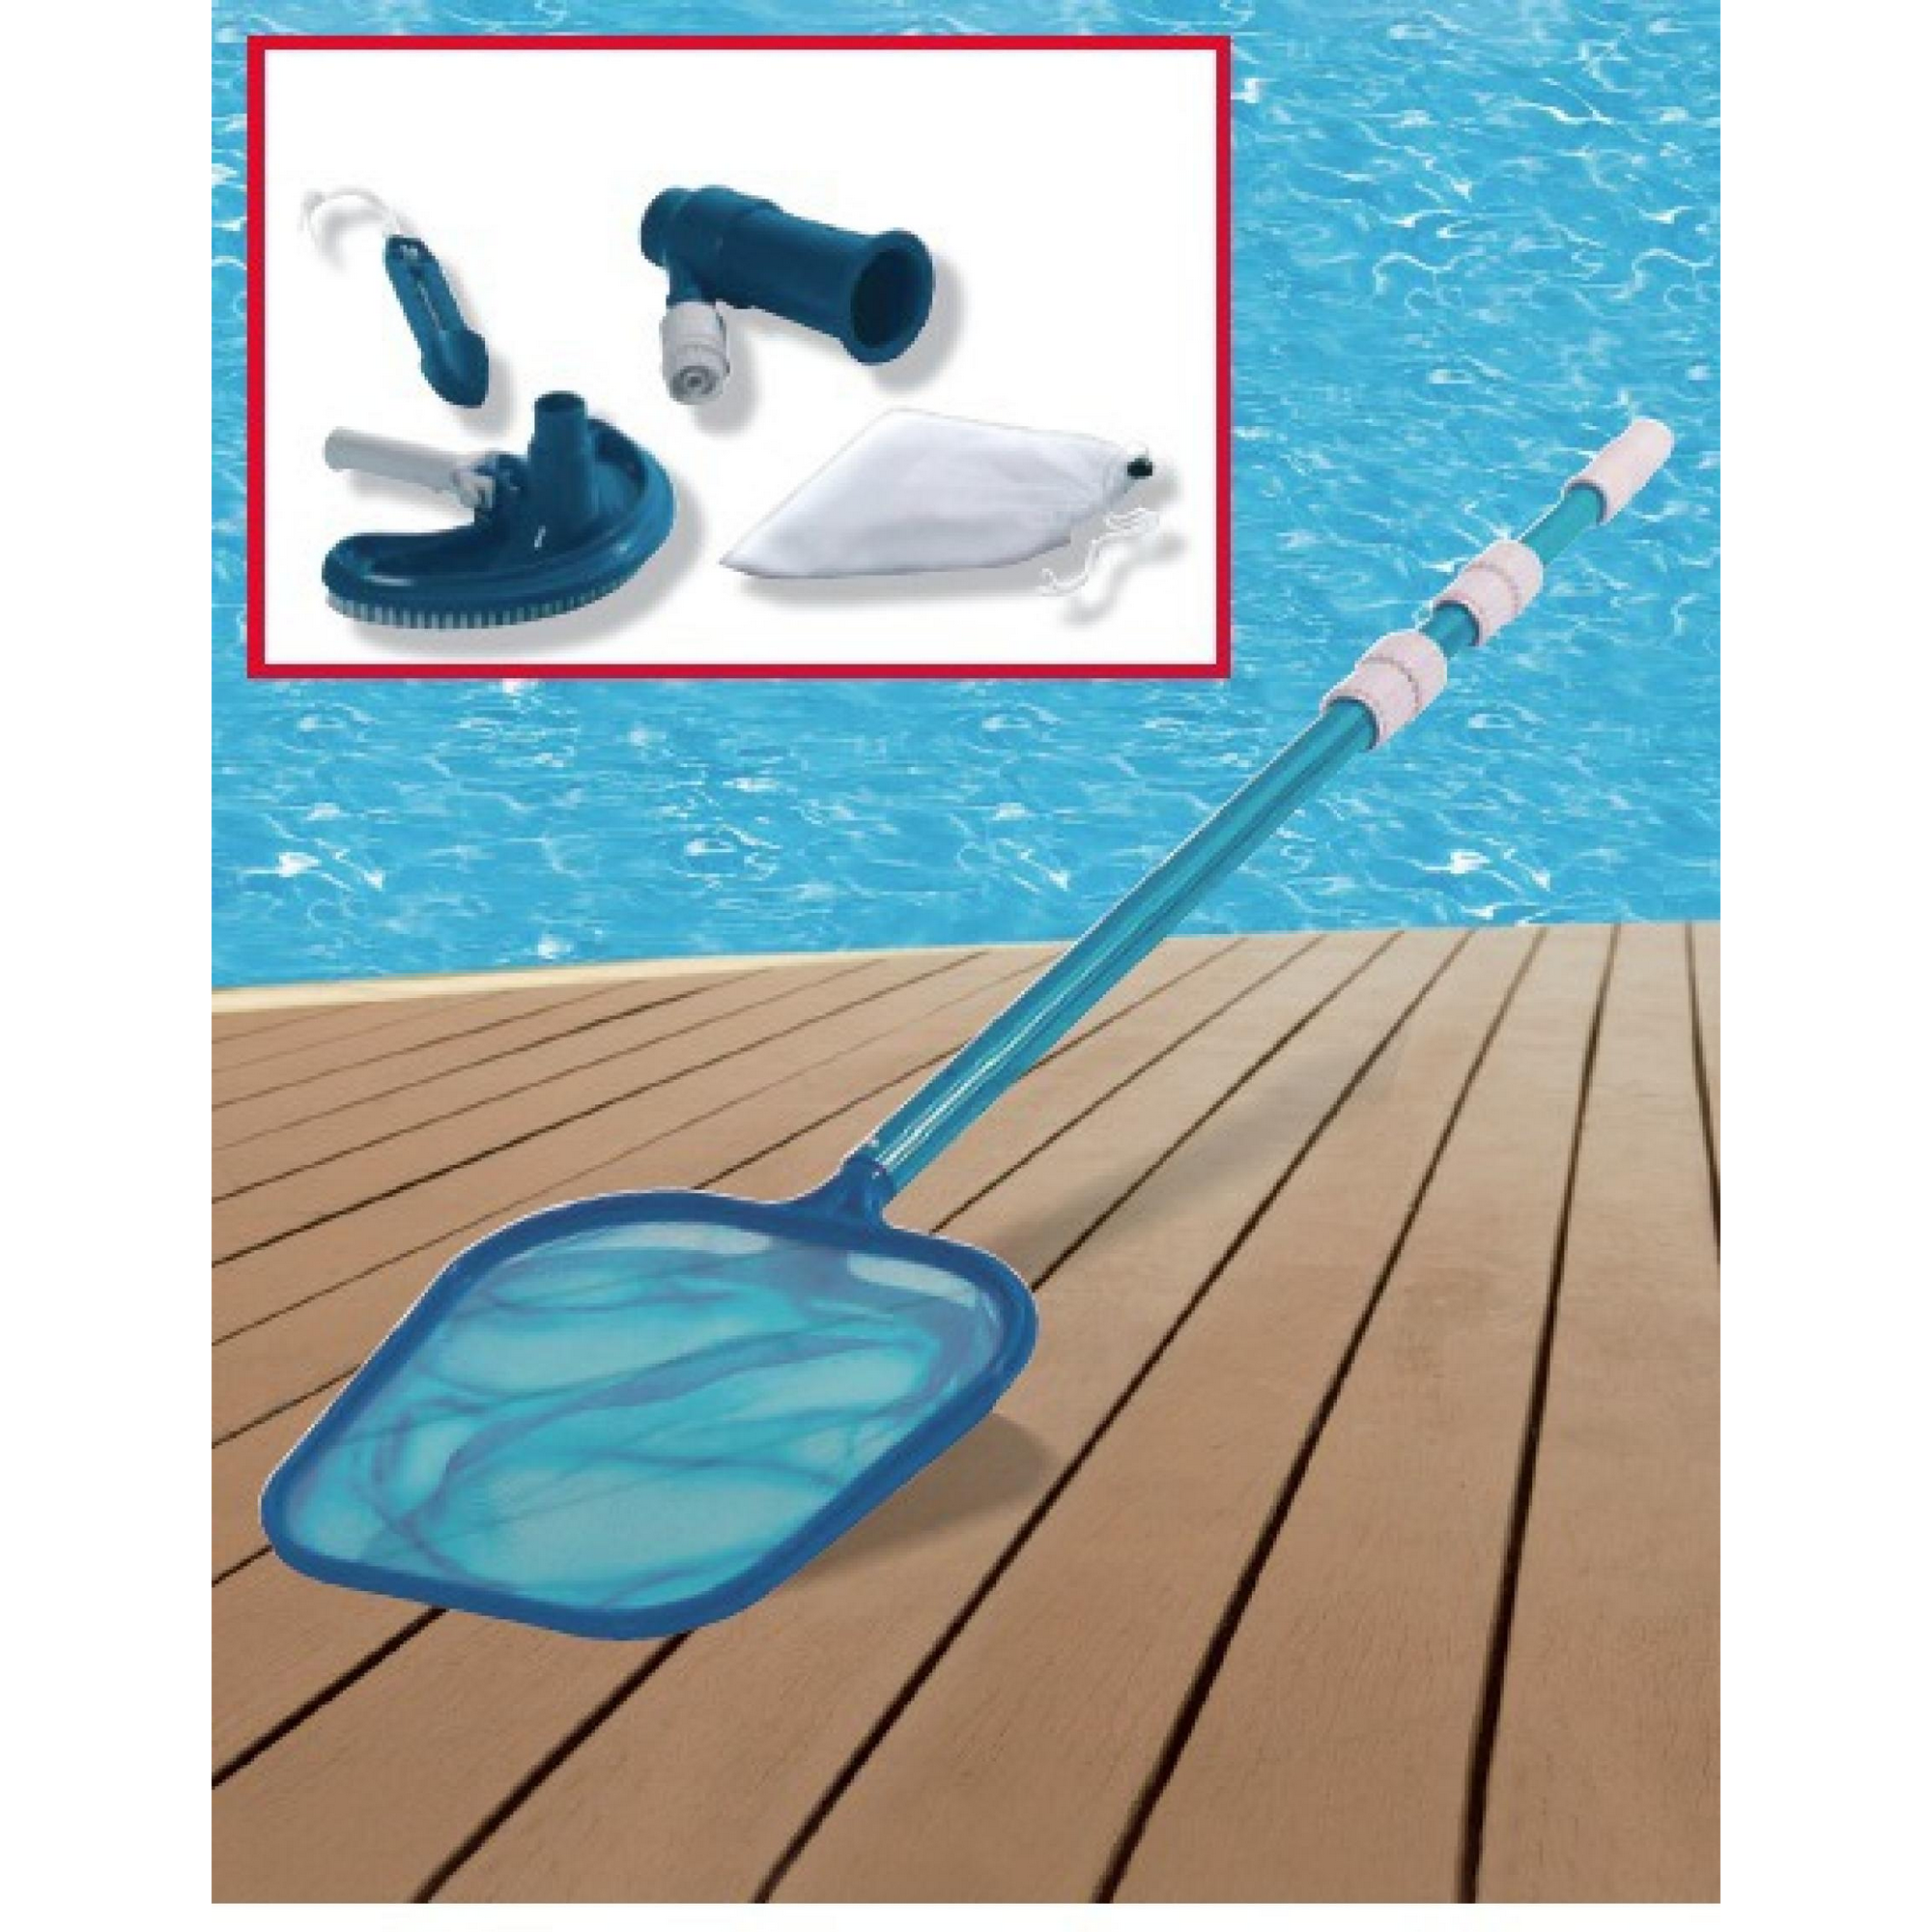 Poolpflege-Set für Pools mit Sandfilteranlage, 4-tlg + product picture